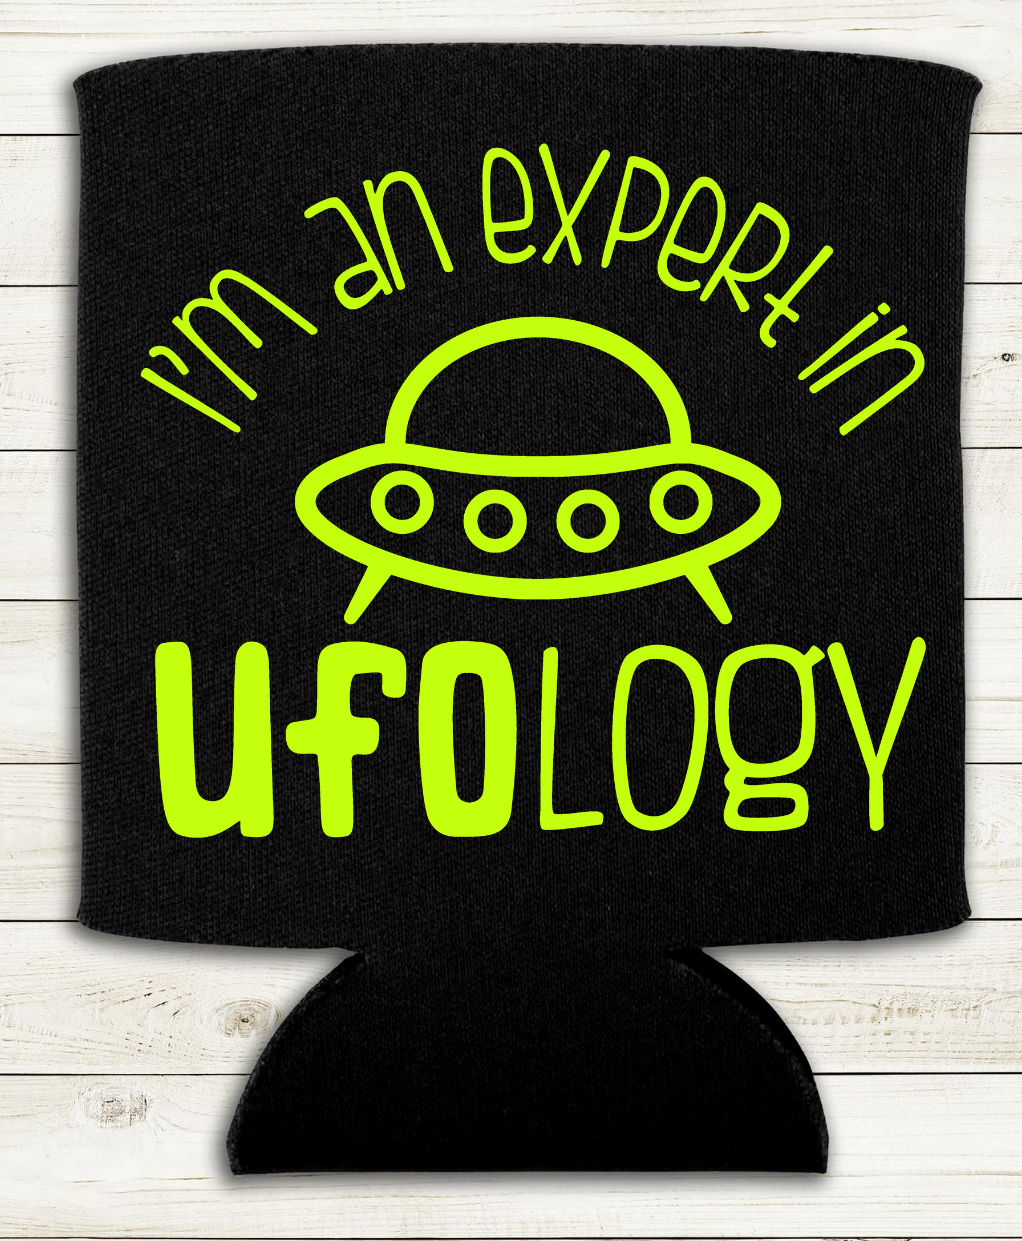 I'm an Expert in UFOlogy - Can Cooler Koozie ET UFO Alien - Mister Snarky's